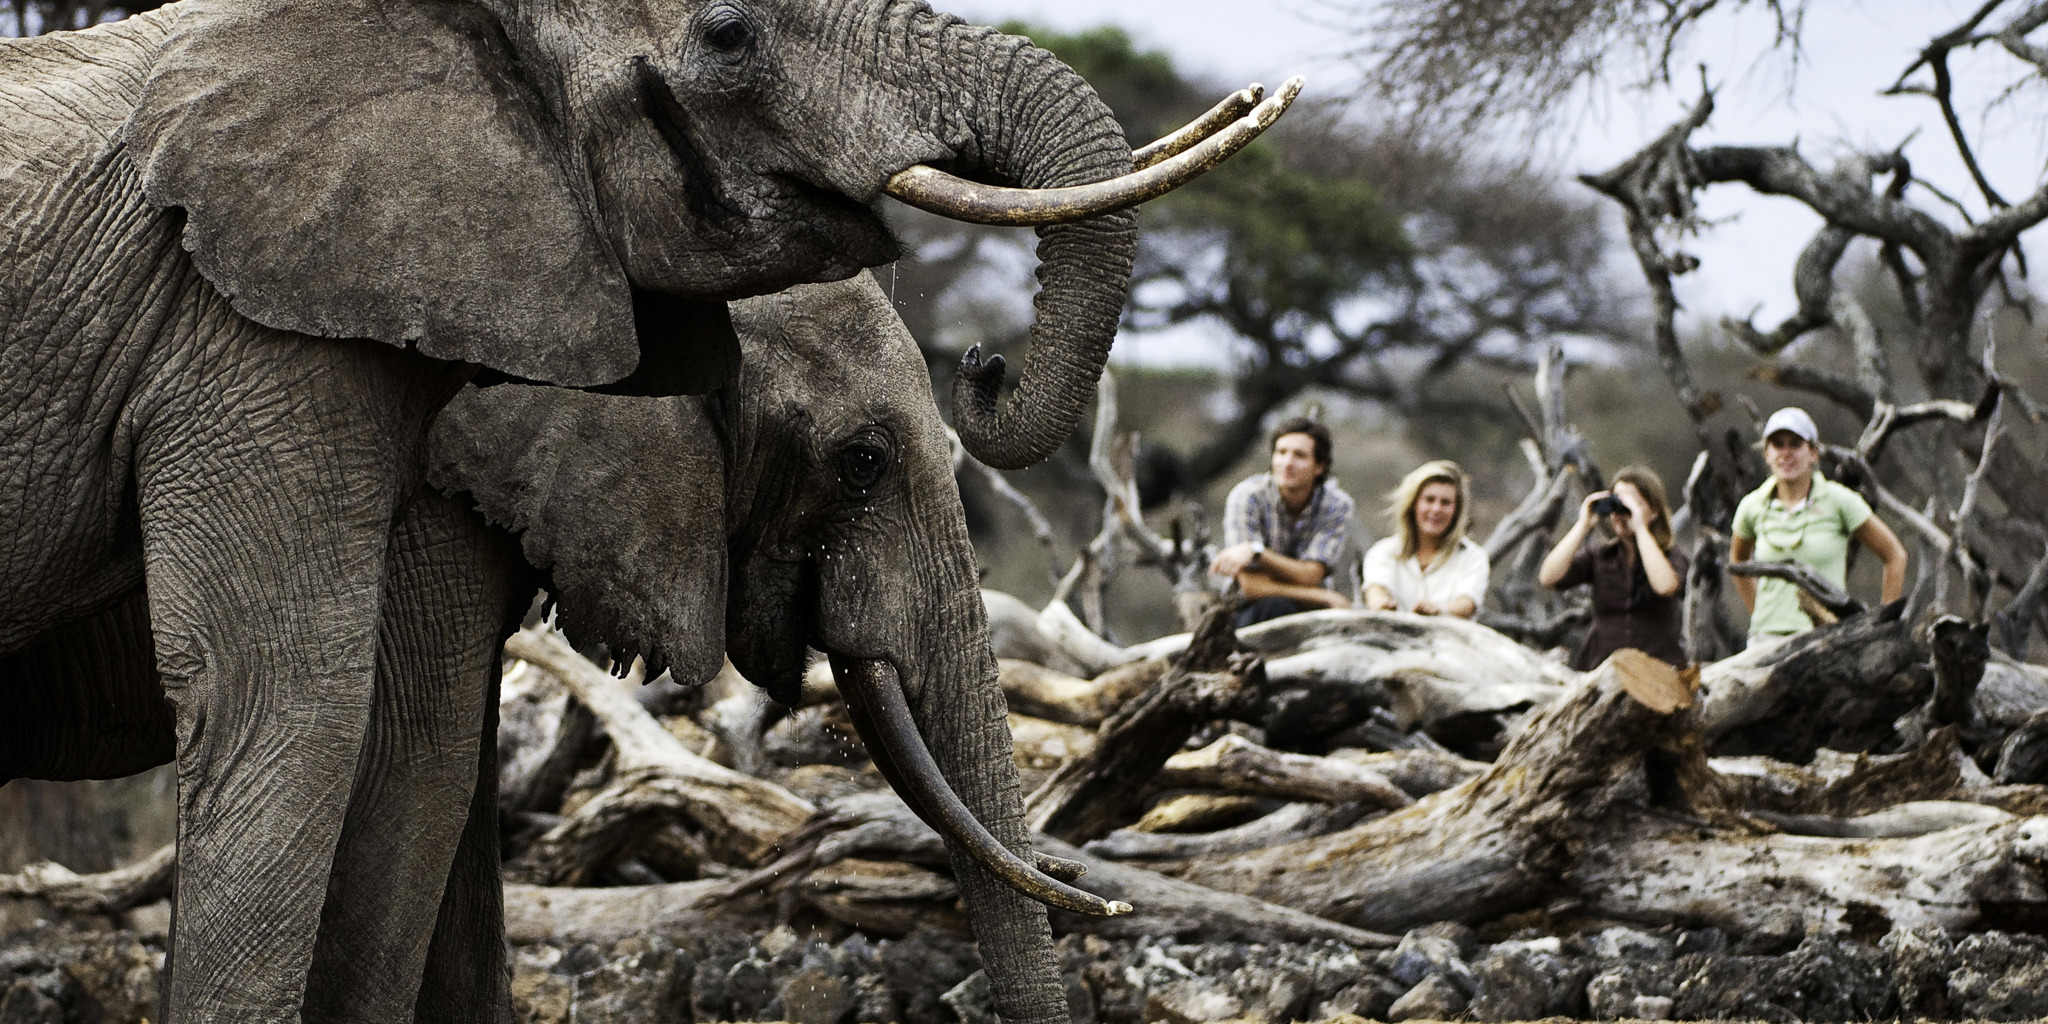 Two elephants in the maasai mara, kenya walking safaris